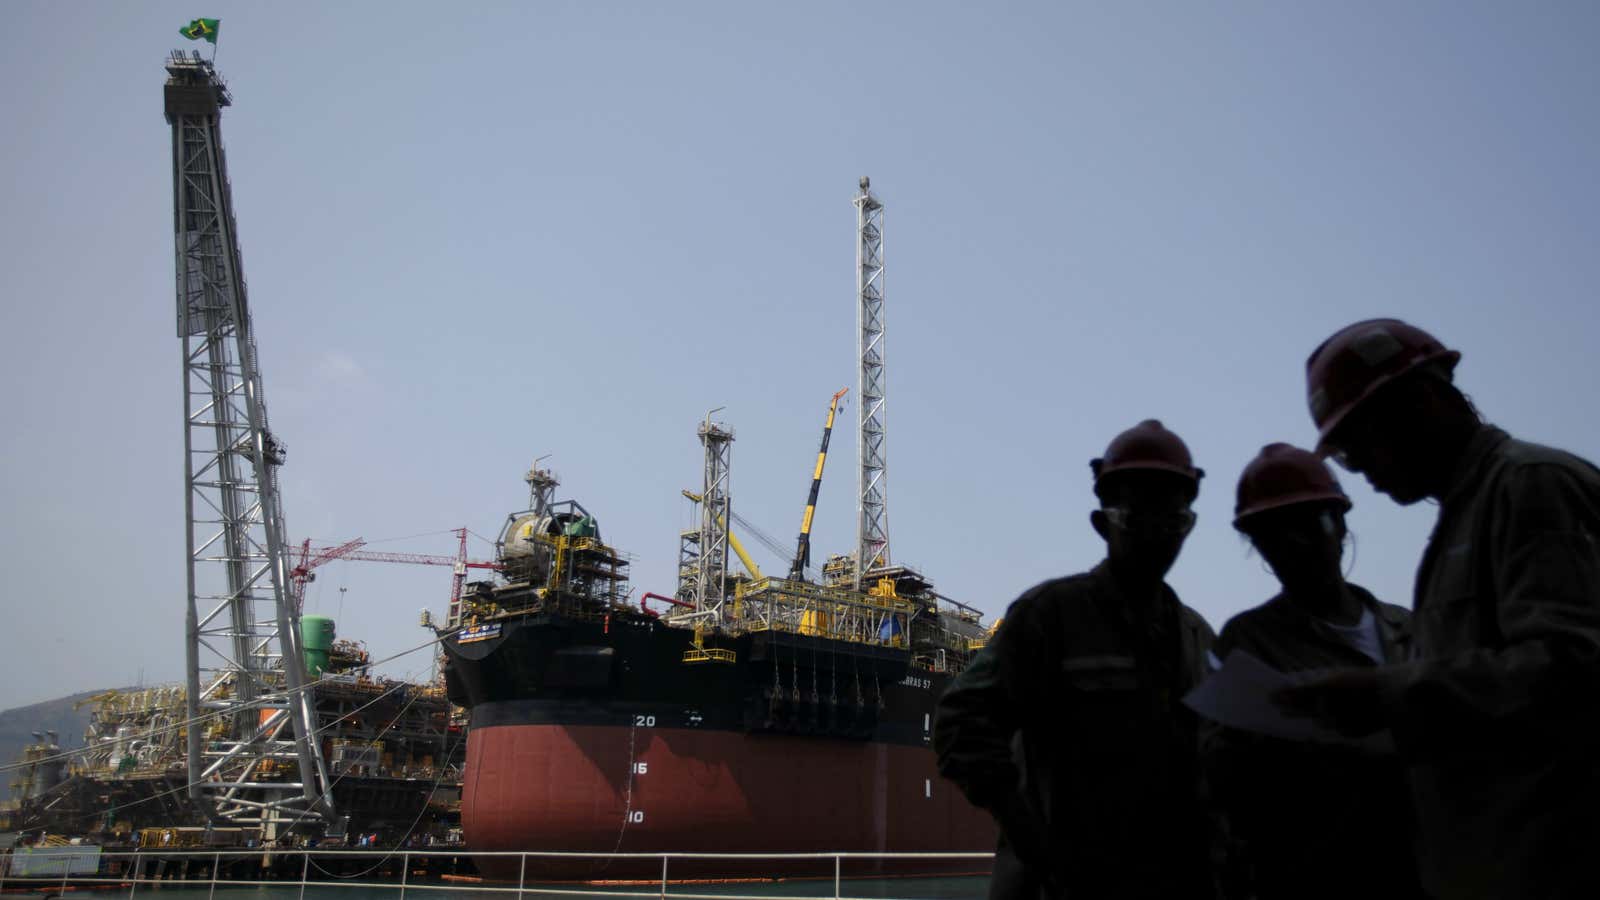 China’s taken a shine to Brazil’s struggling oil giant.